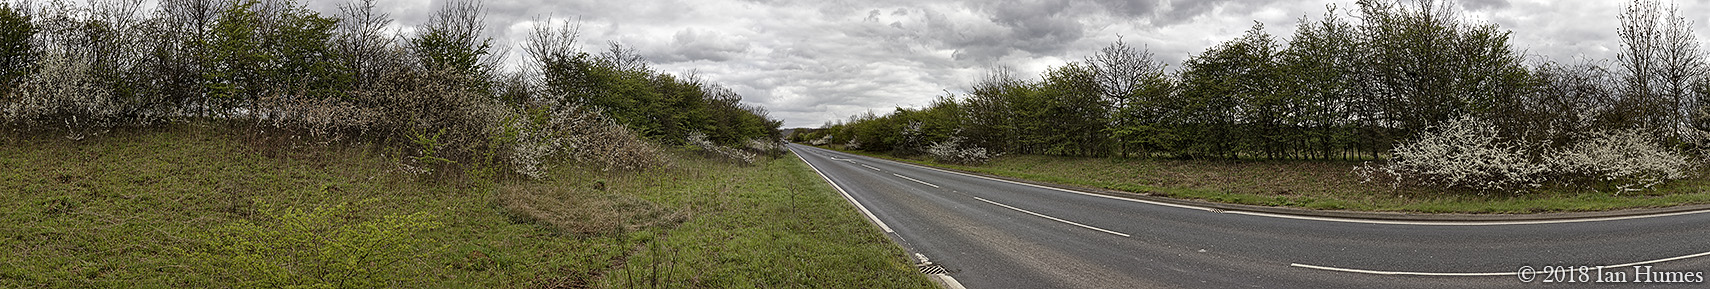 A121 Dowding Way - Essex